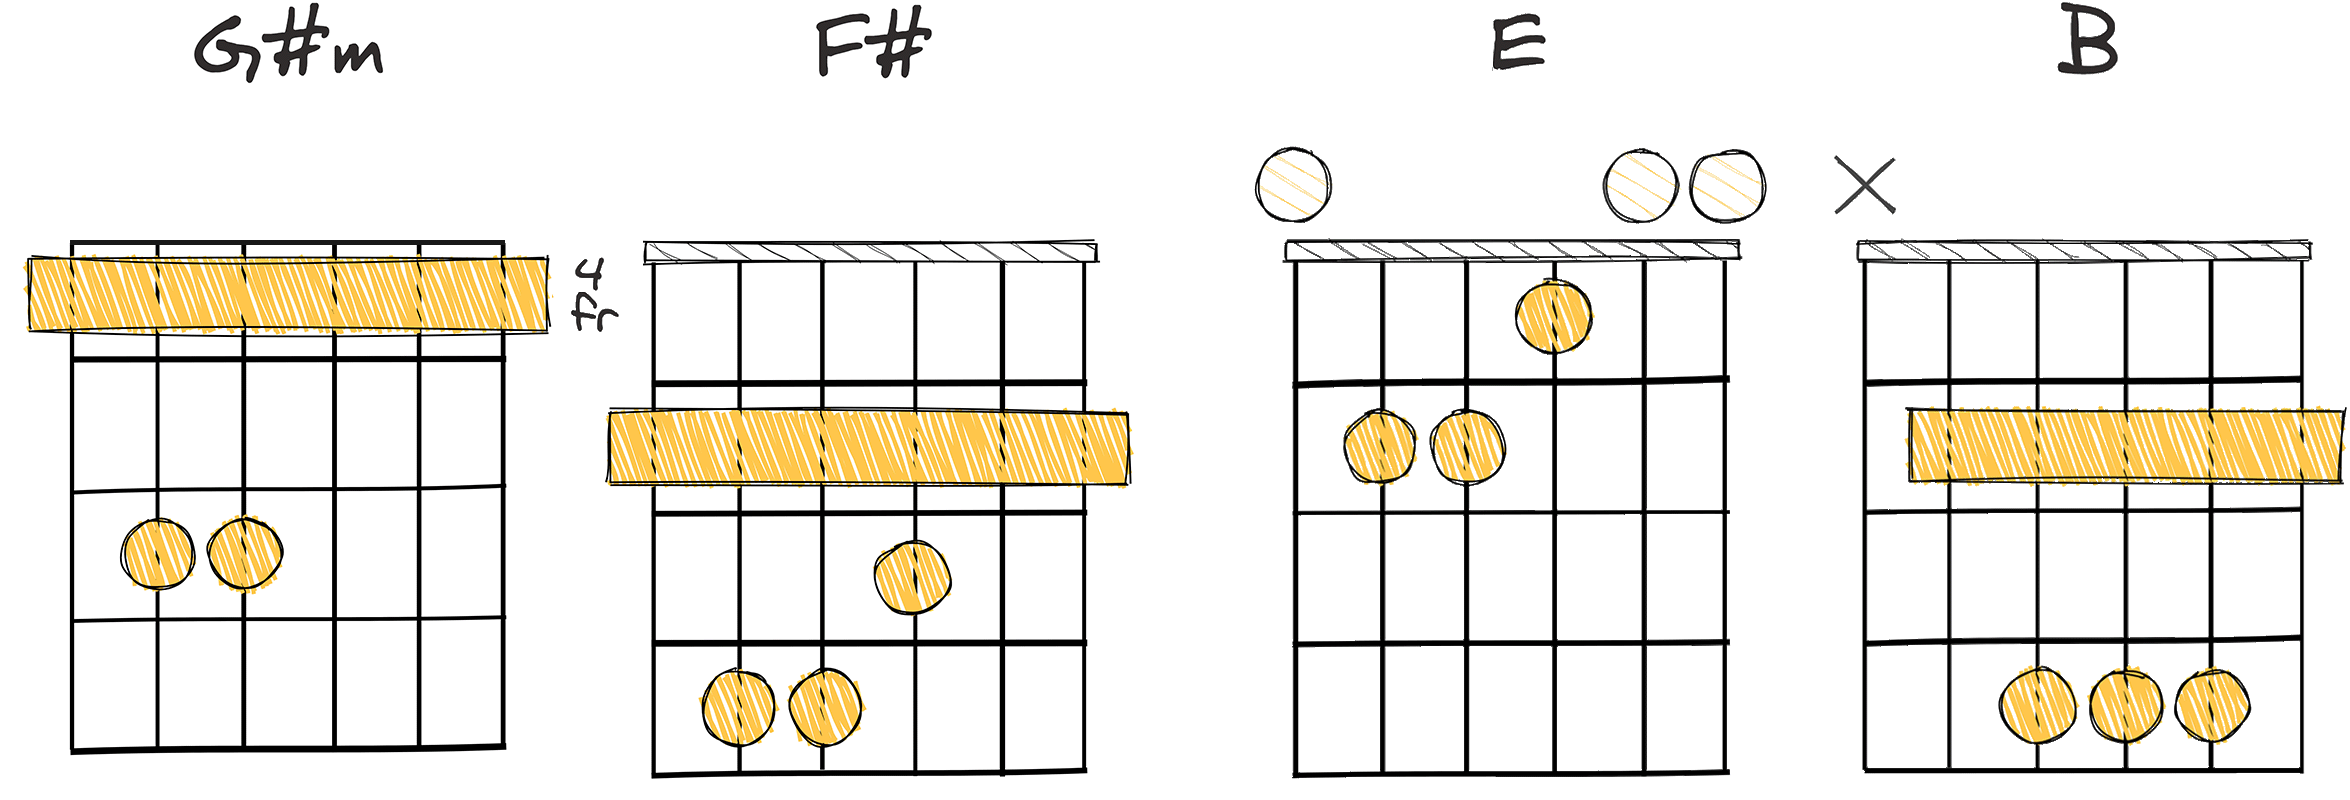 vi - V - IV - I (6-5-4-1) chords diagram